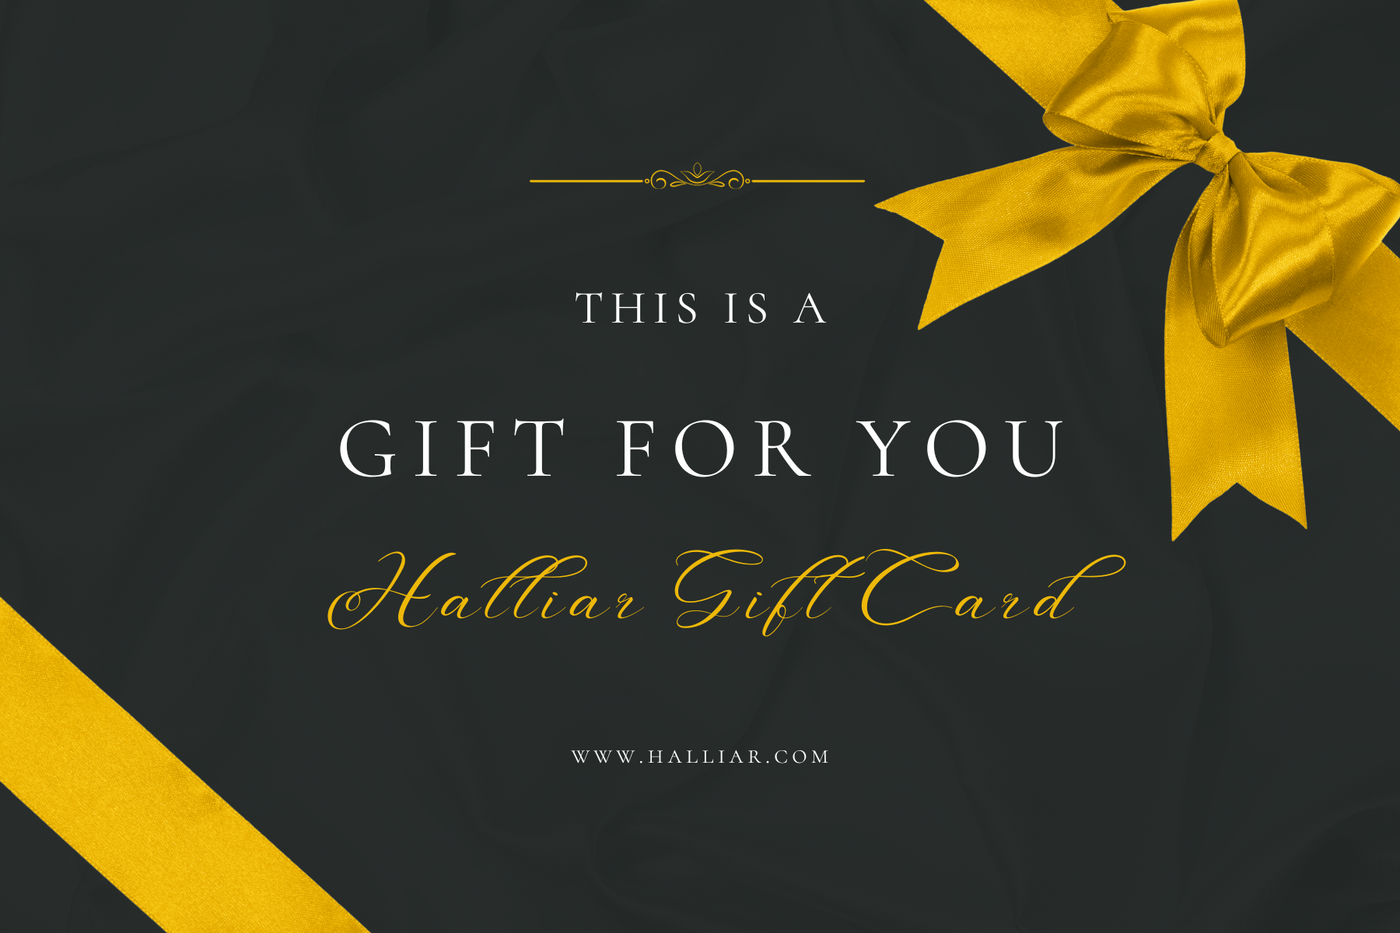 Halliar Gift Card